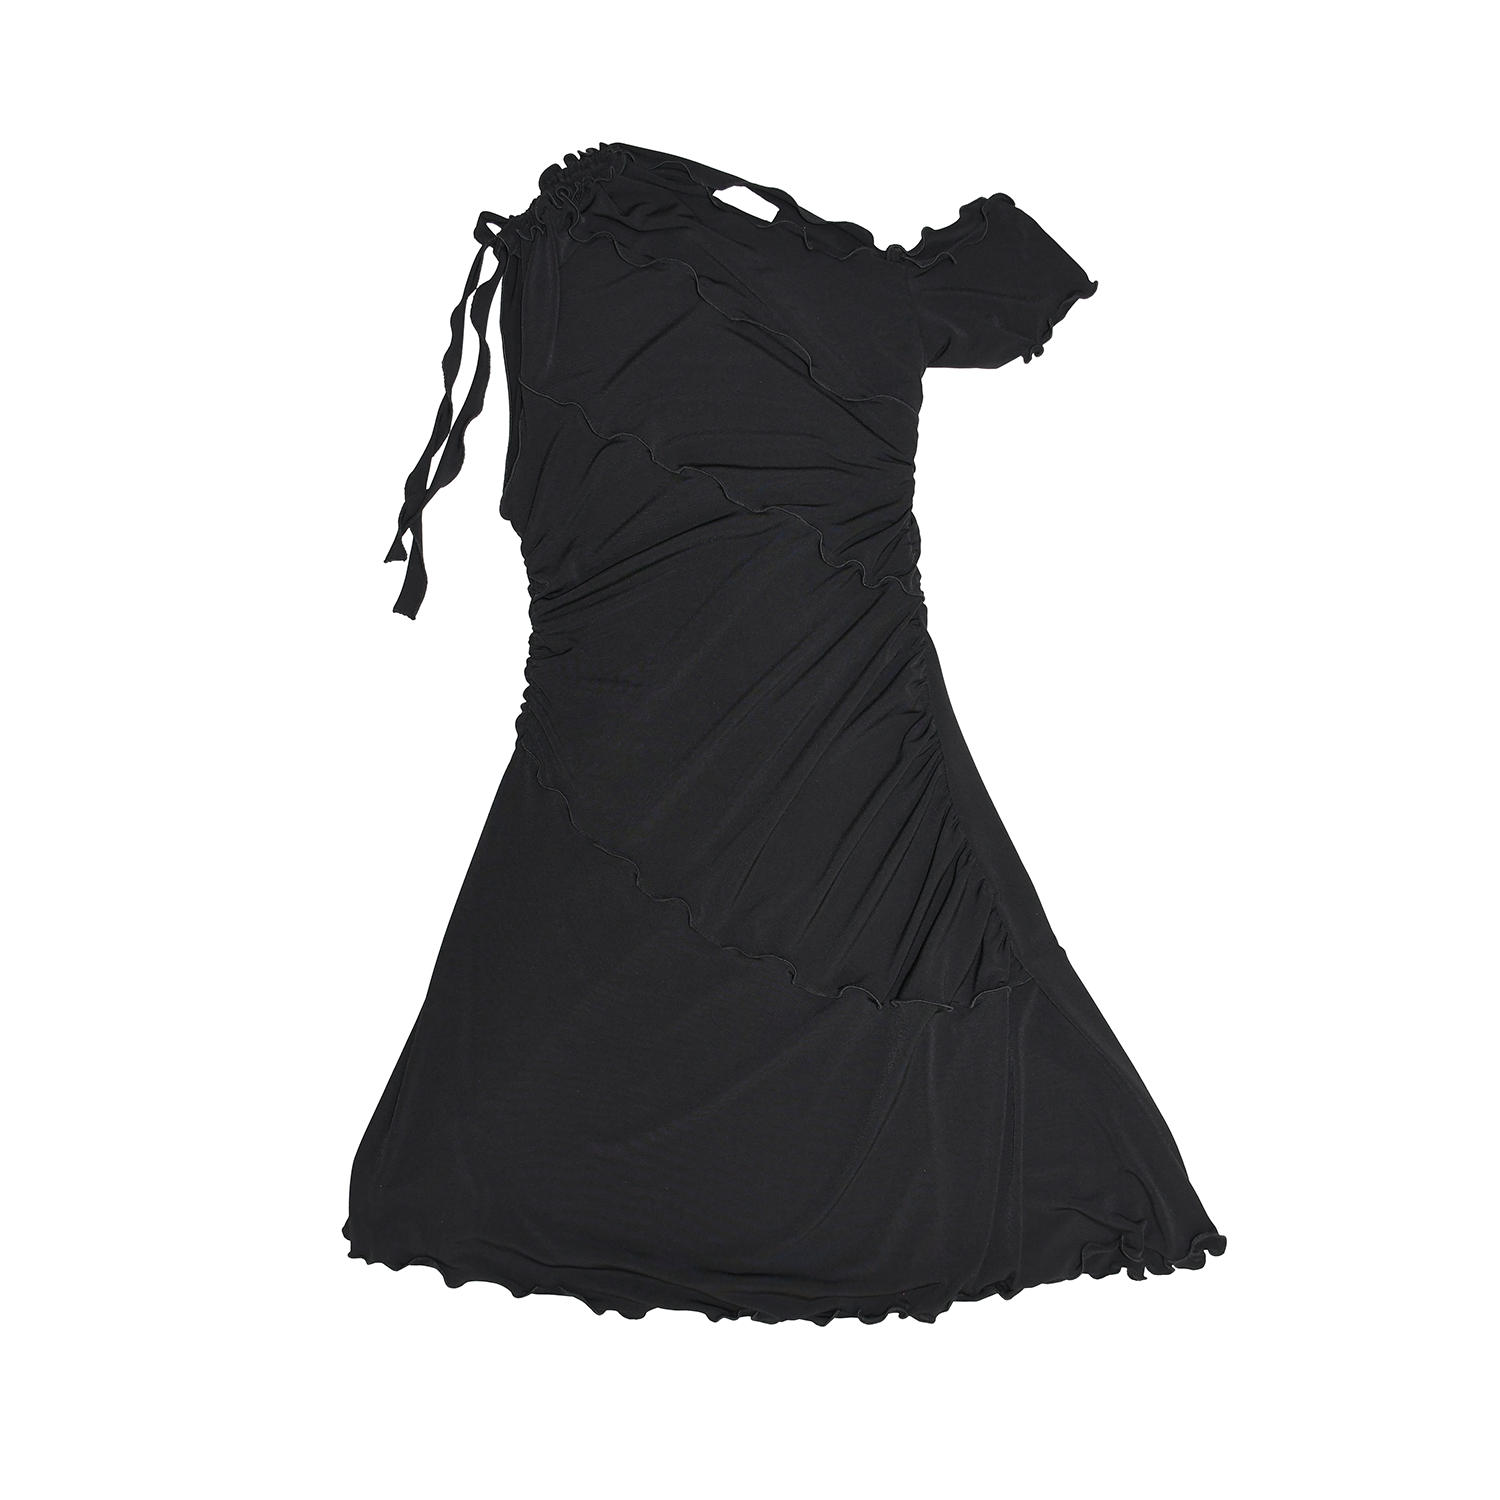 OATS - Summer Dress Mini - Black